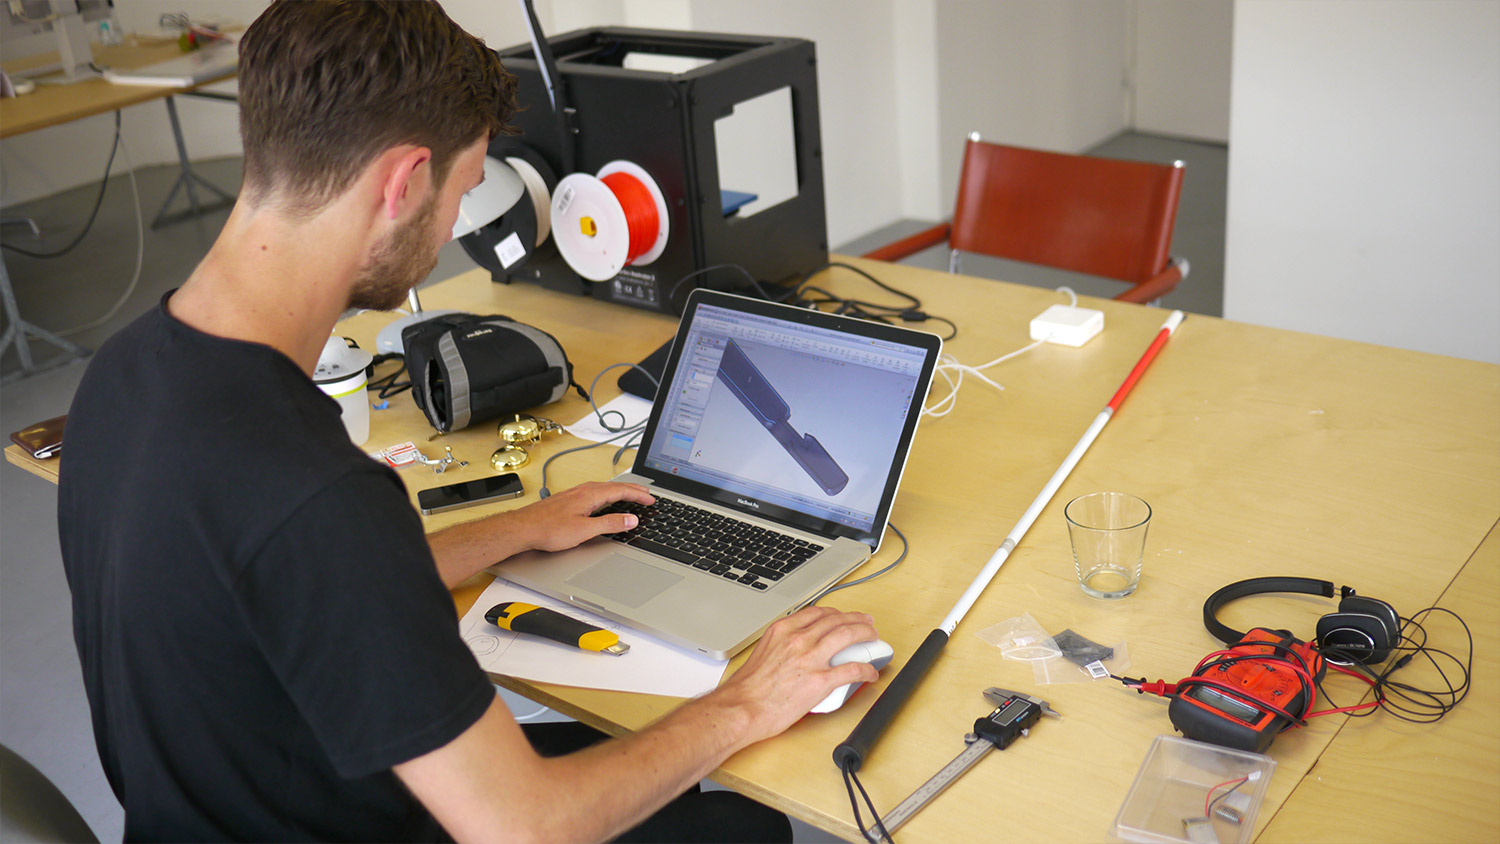 Ruben van der Vleuten while working on the industrial design of the interface